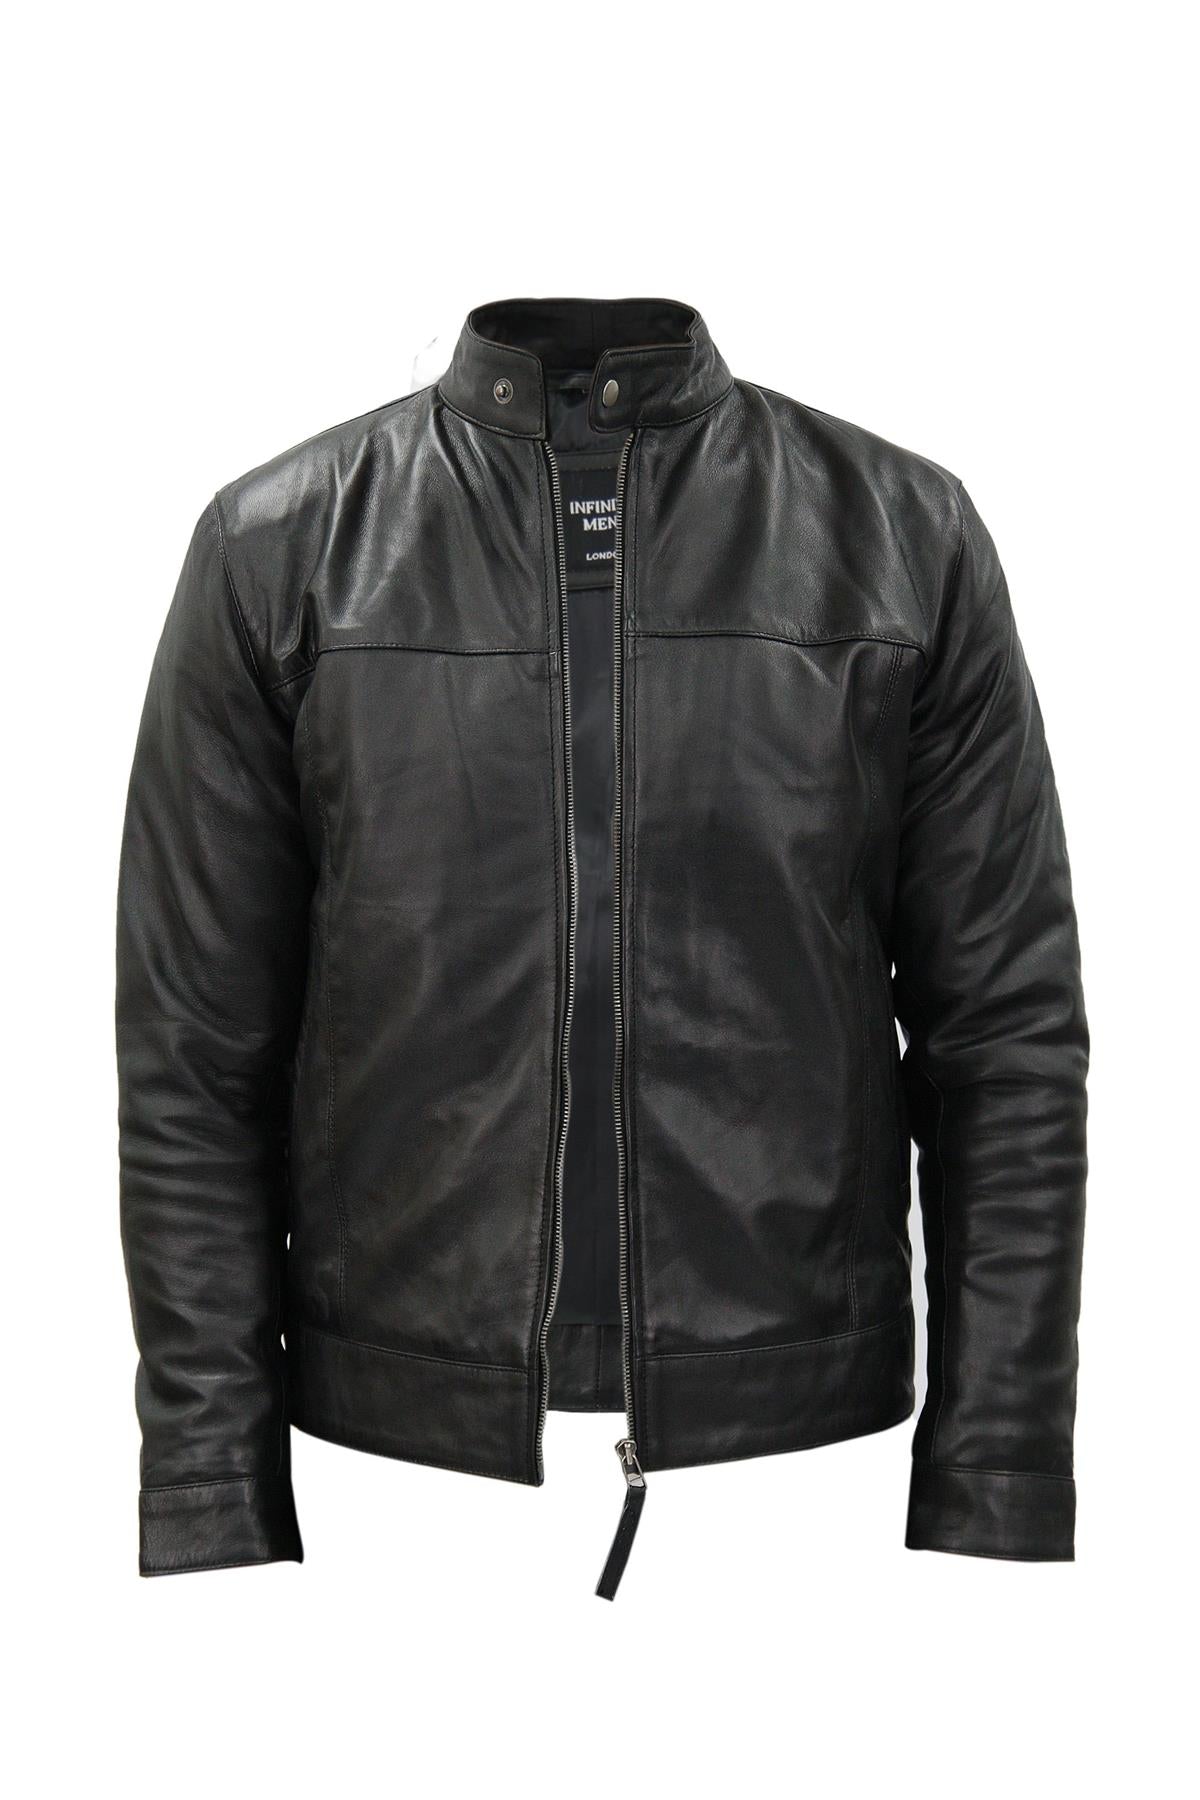 Mens Classic Retro Leather Biker Jacket-Snodland